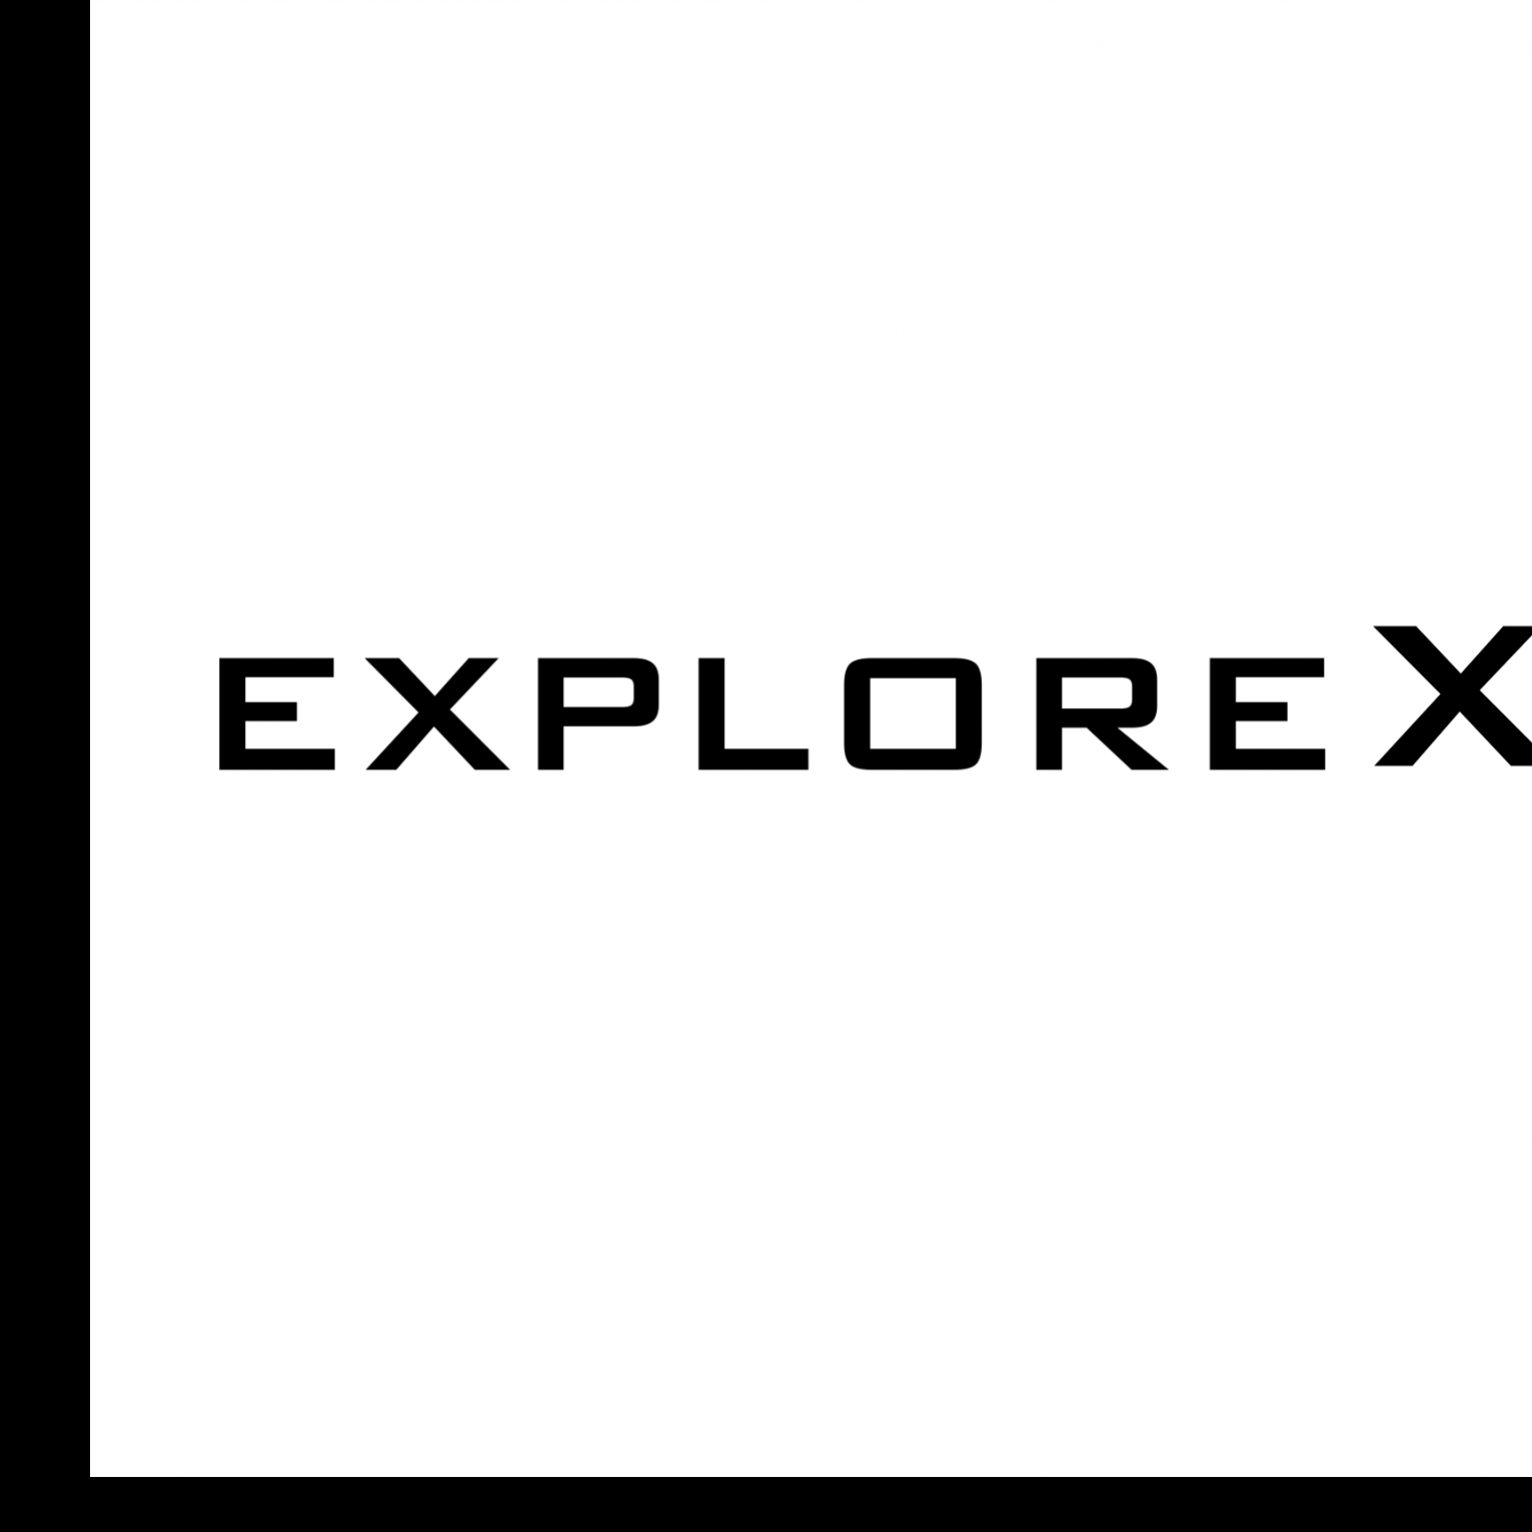 explorex